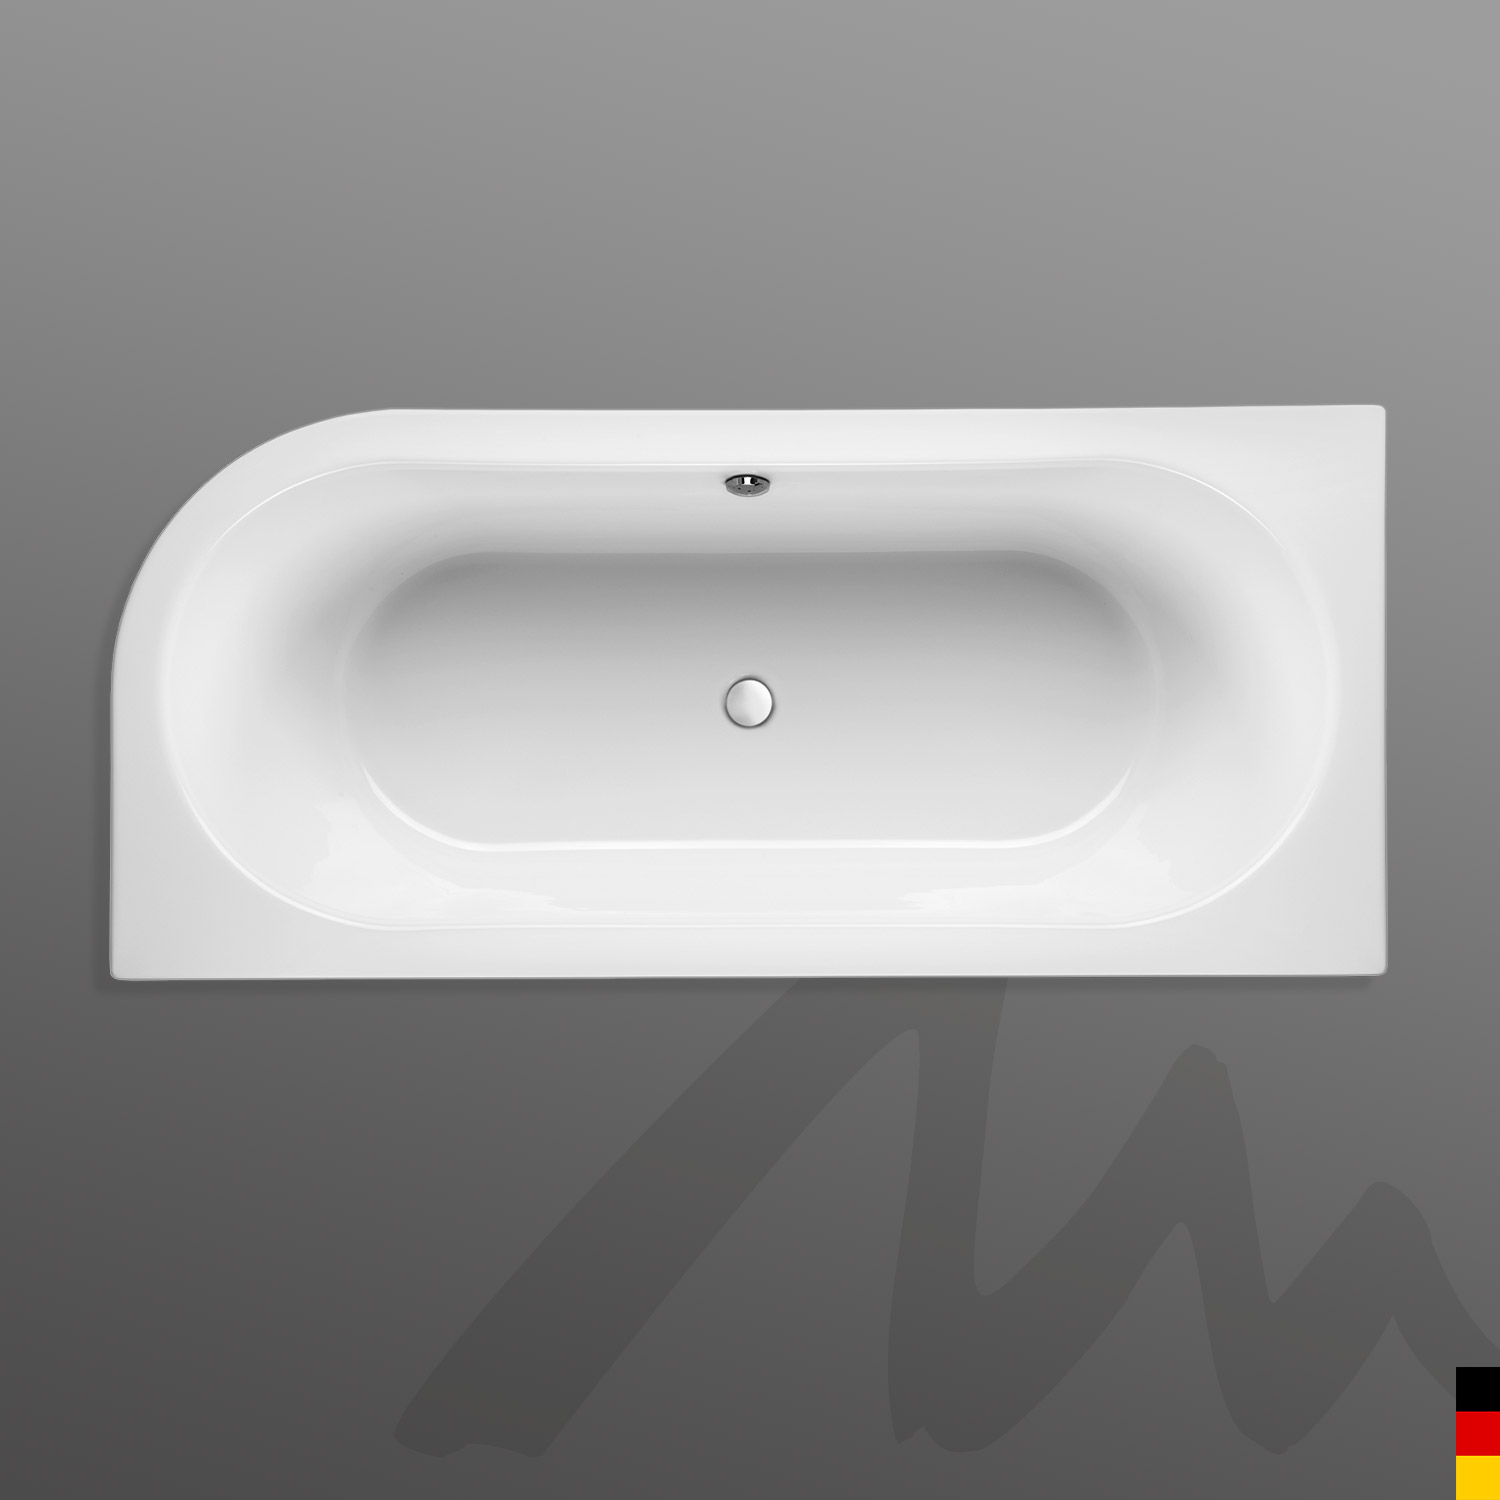 Mauersberger Badewanne Oval Primo 1 - 180/80 duo Ausführung rechts  180x80x45  Farbe:rein-weiß